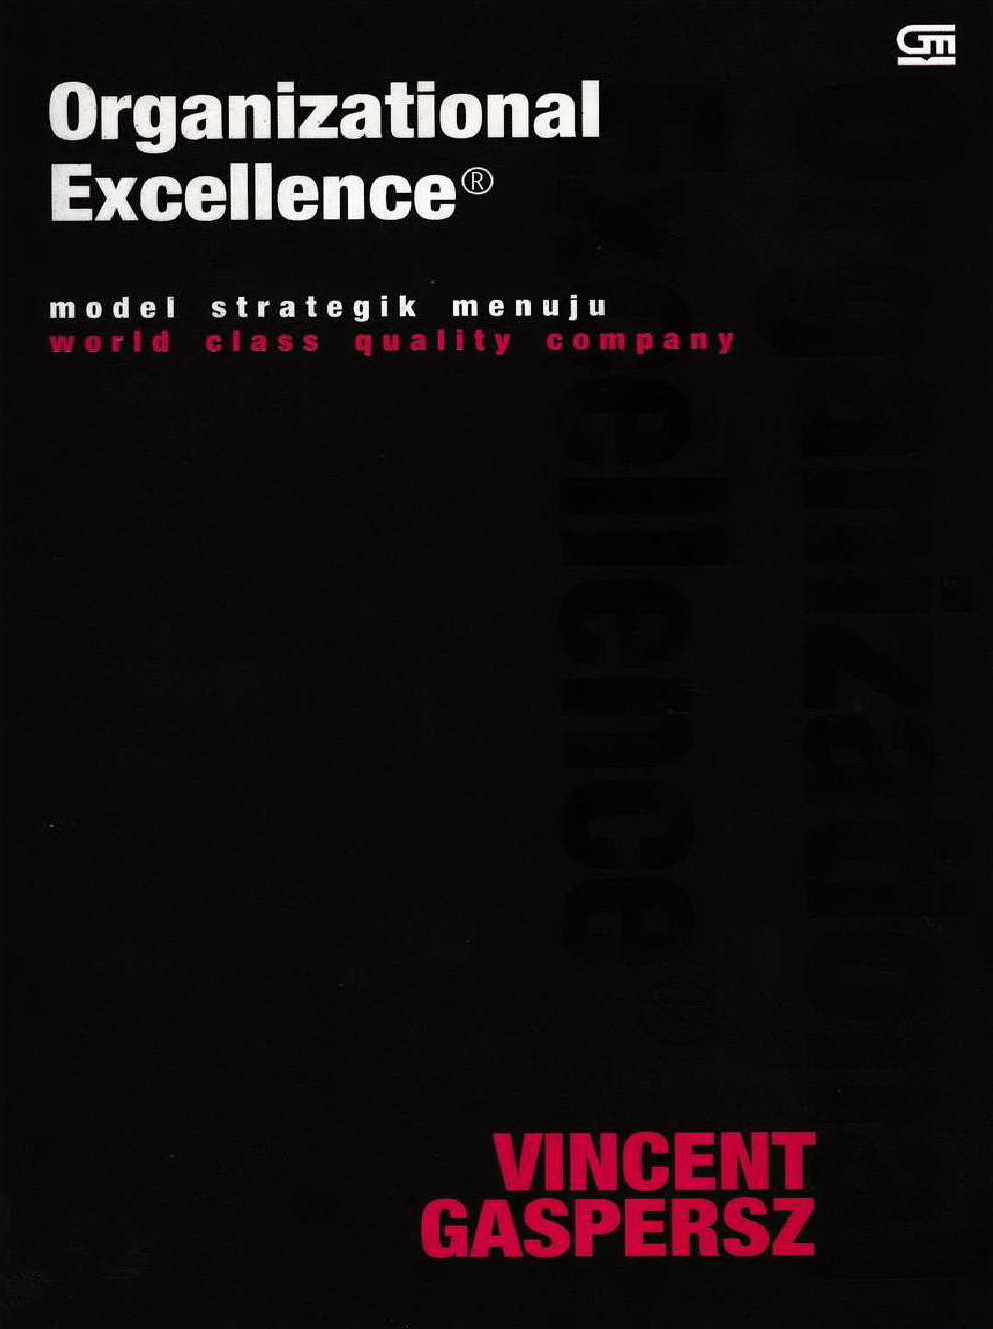 2007 Organizational Excellence Model Strategik Menuju World Class Quality Company VG